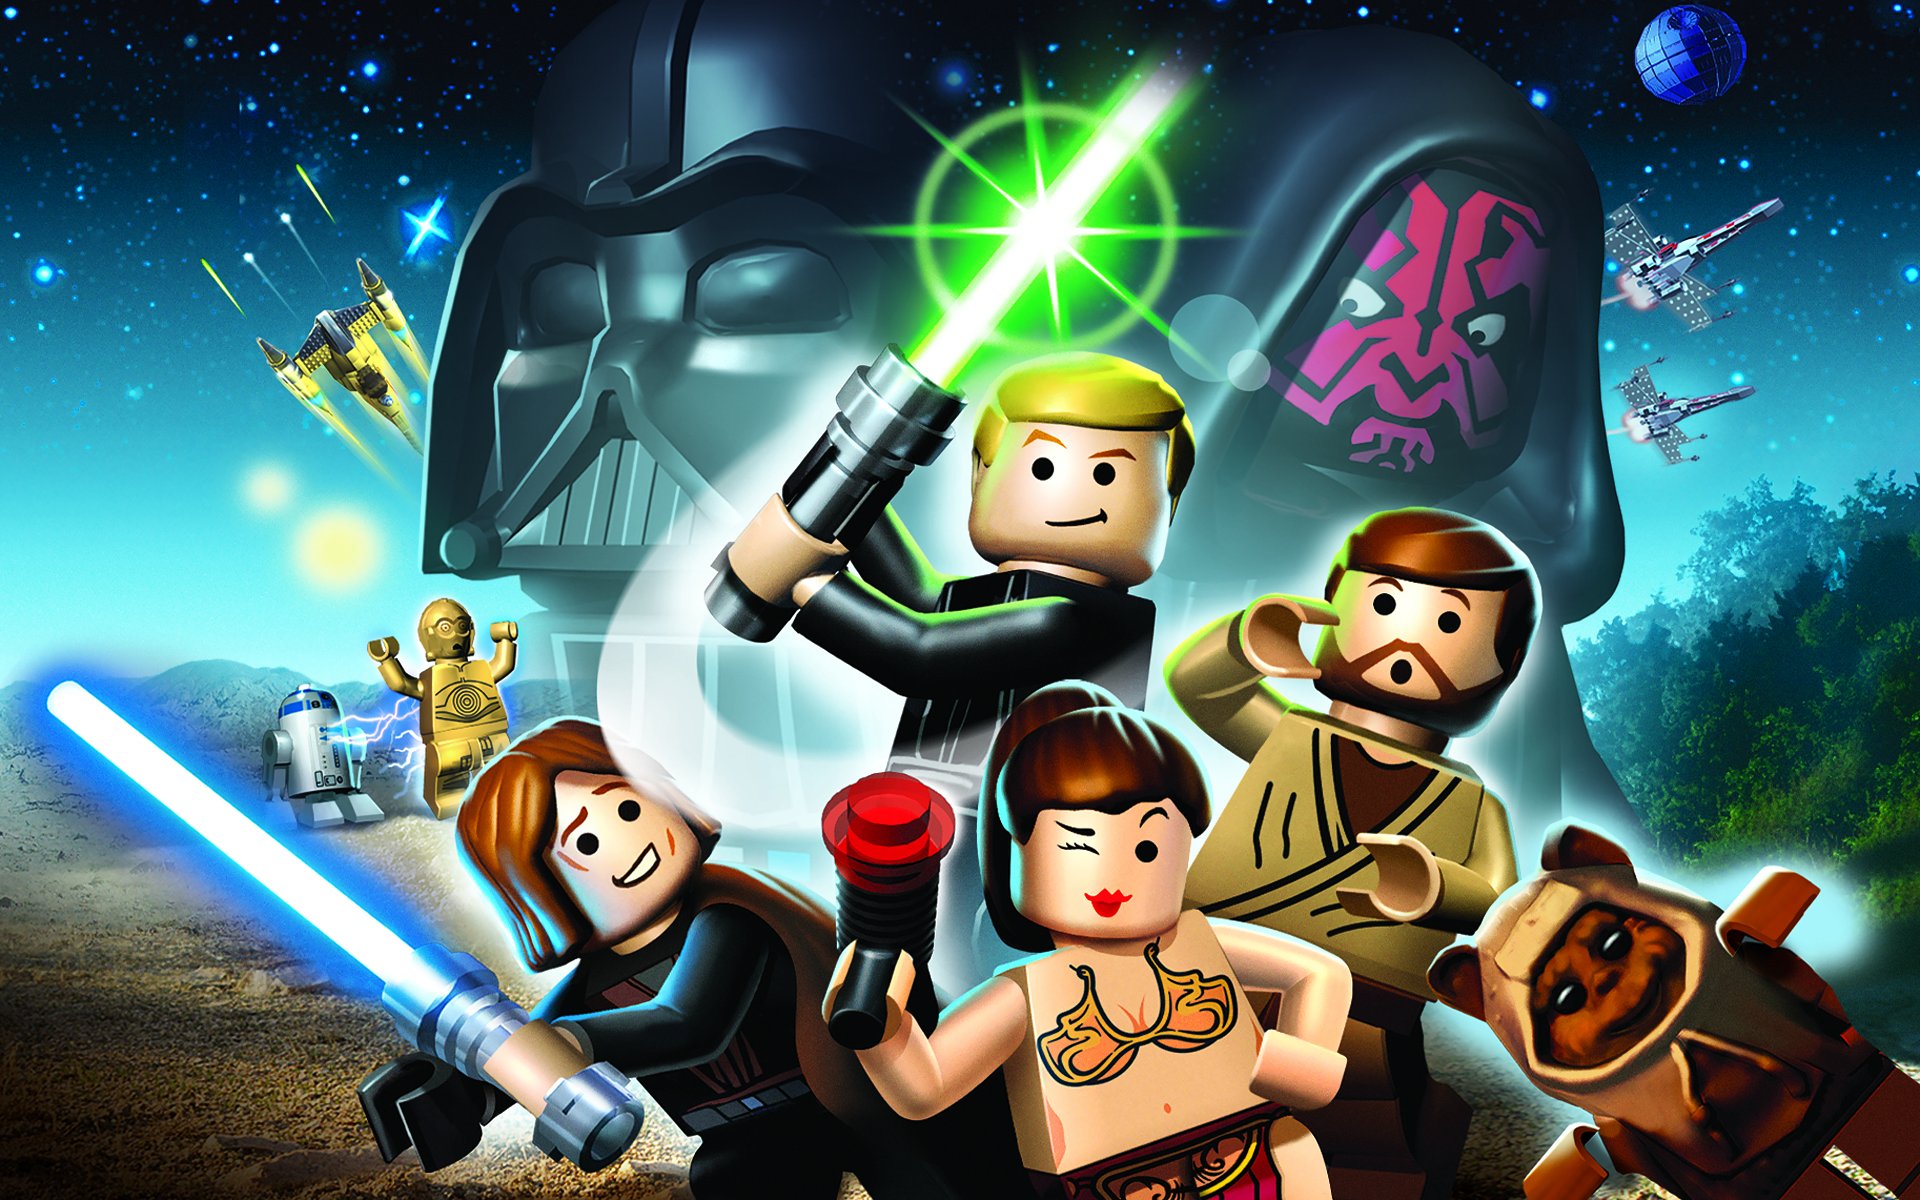 Lego Star Wars Movie Poster - wallpaper.